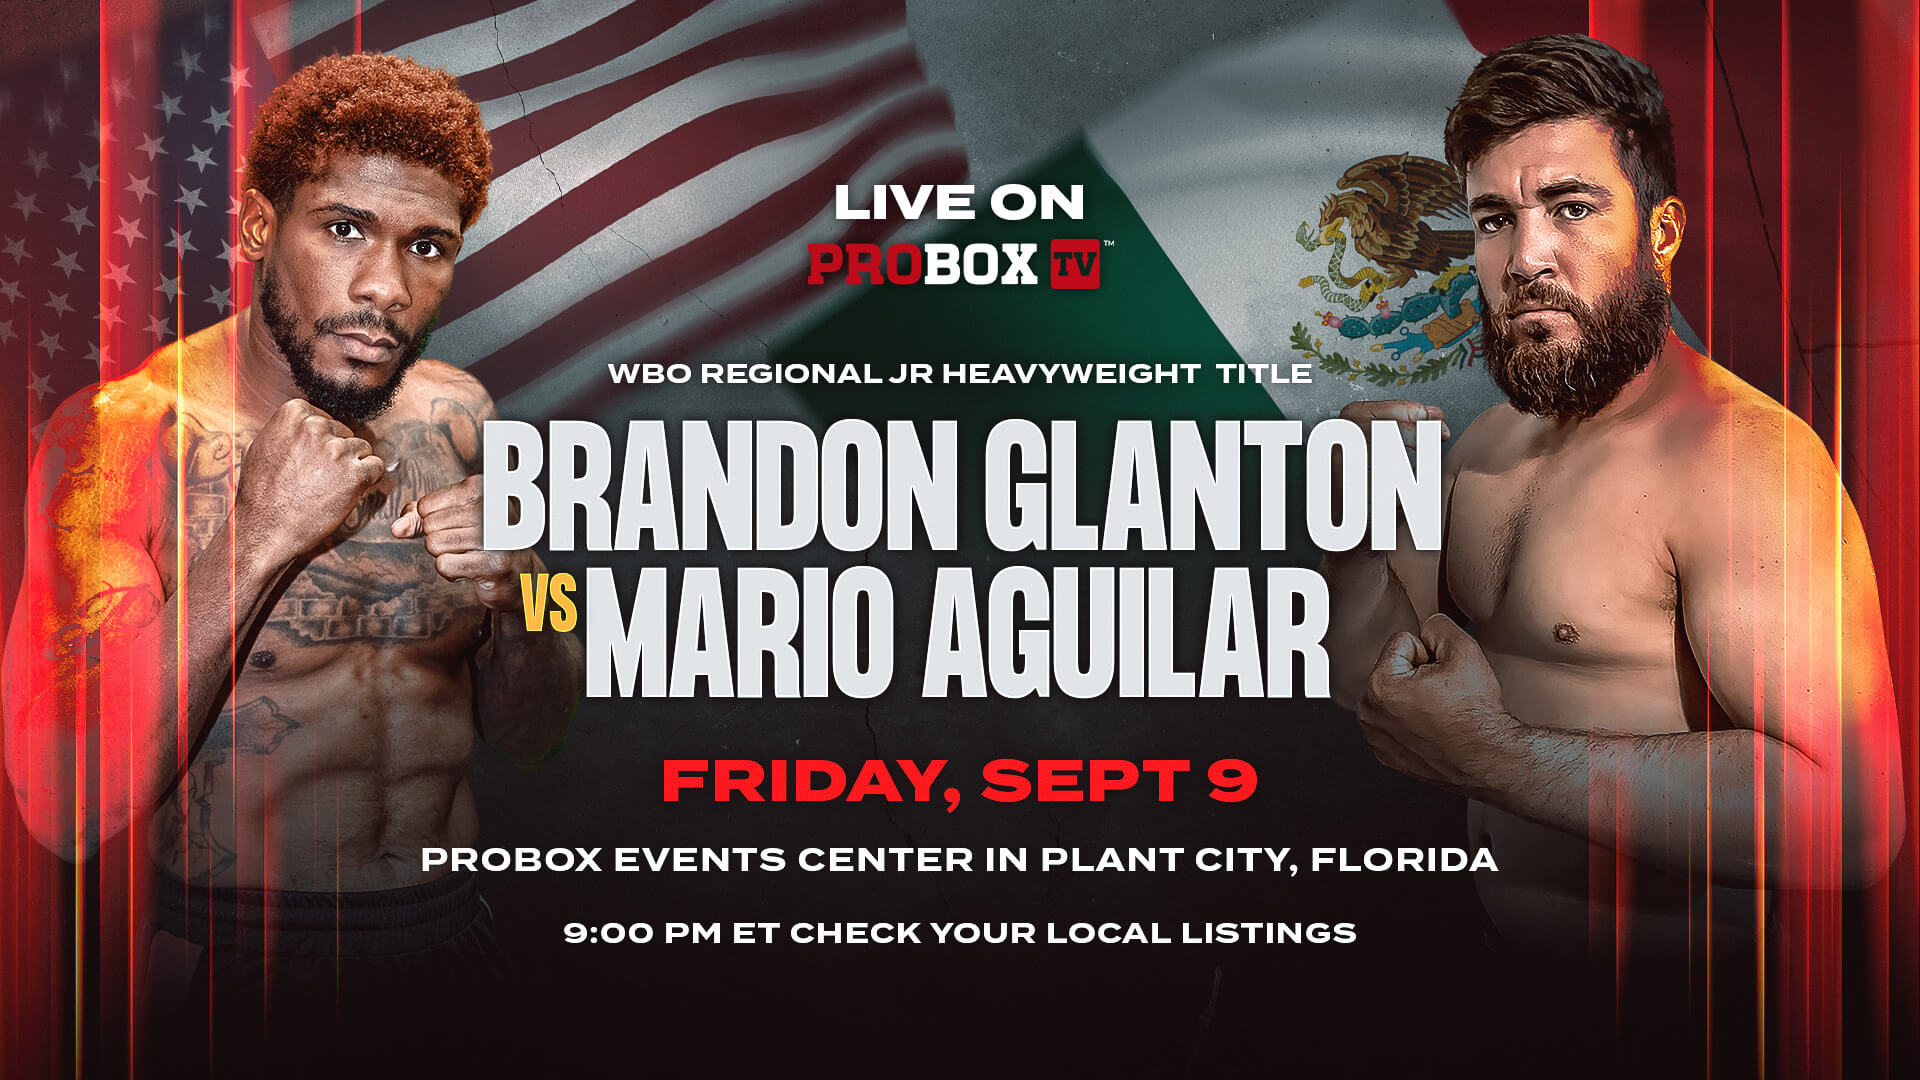 Glanton vs Aguilar, September 9th at ProBox Events Center in Plant City, Florida